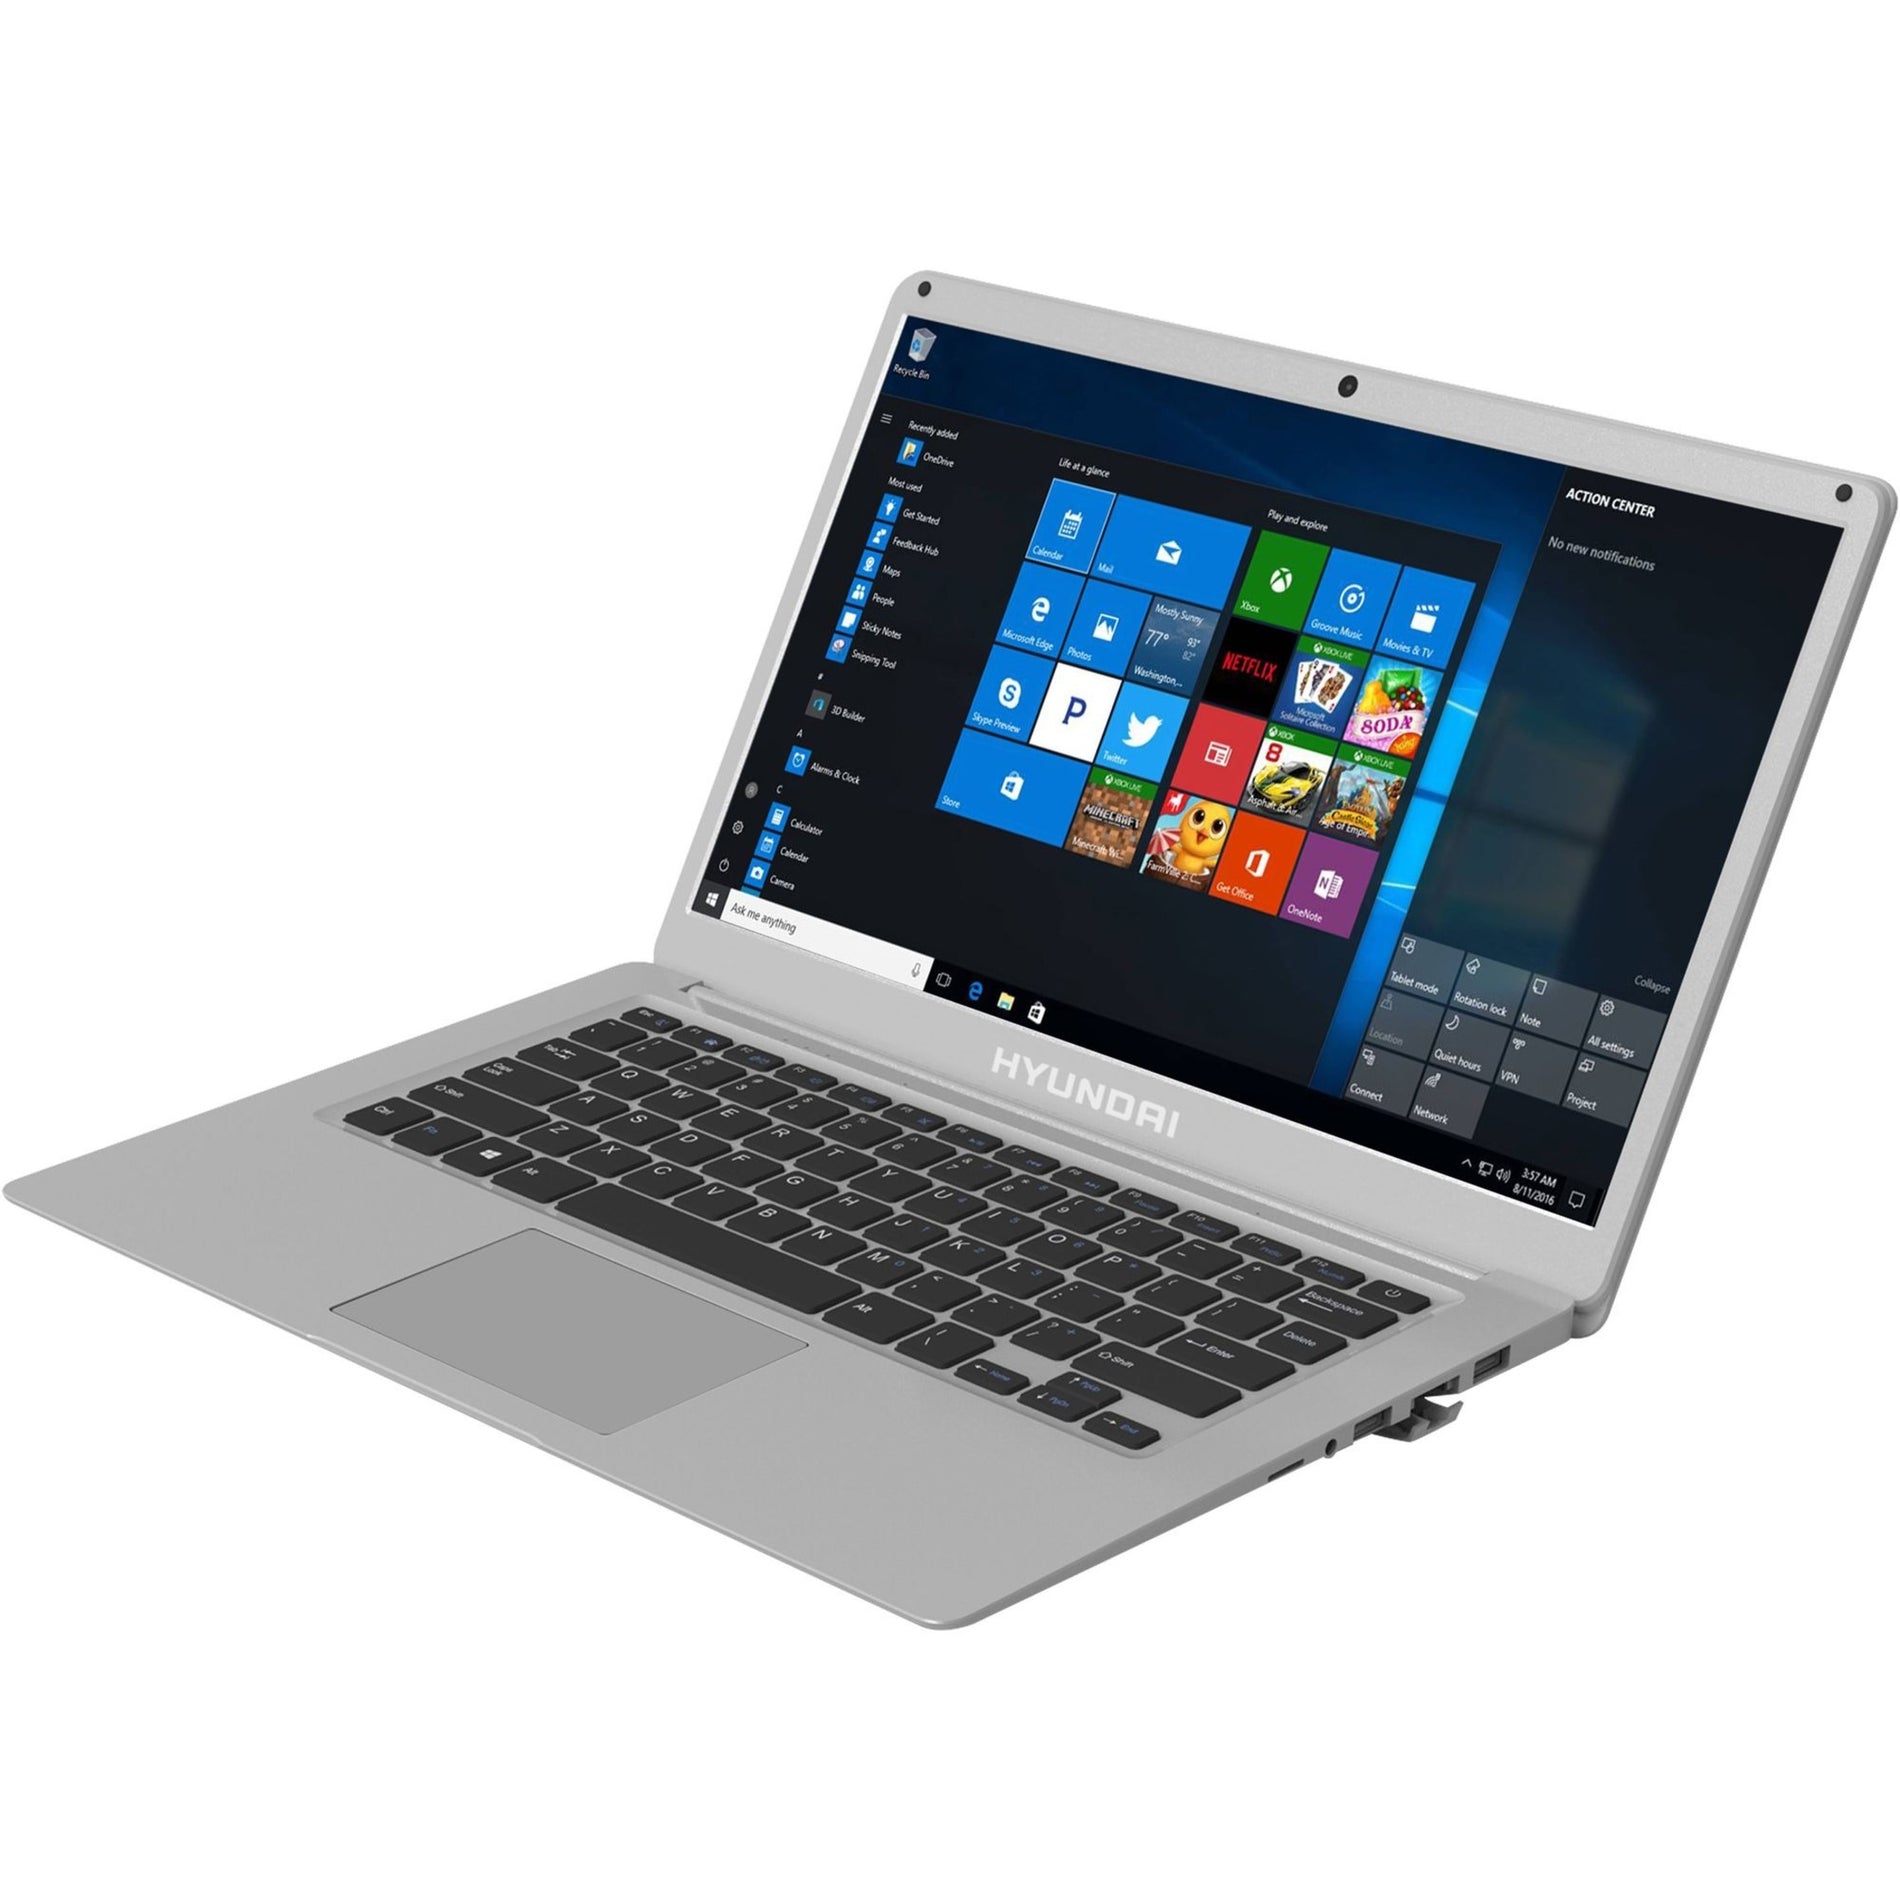 Hyundai Thinnote-A 14.1" Celeron Laptop, 4GB RAM, 64GB Storage, Windows 10 Pro, Silver [Discontinued]